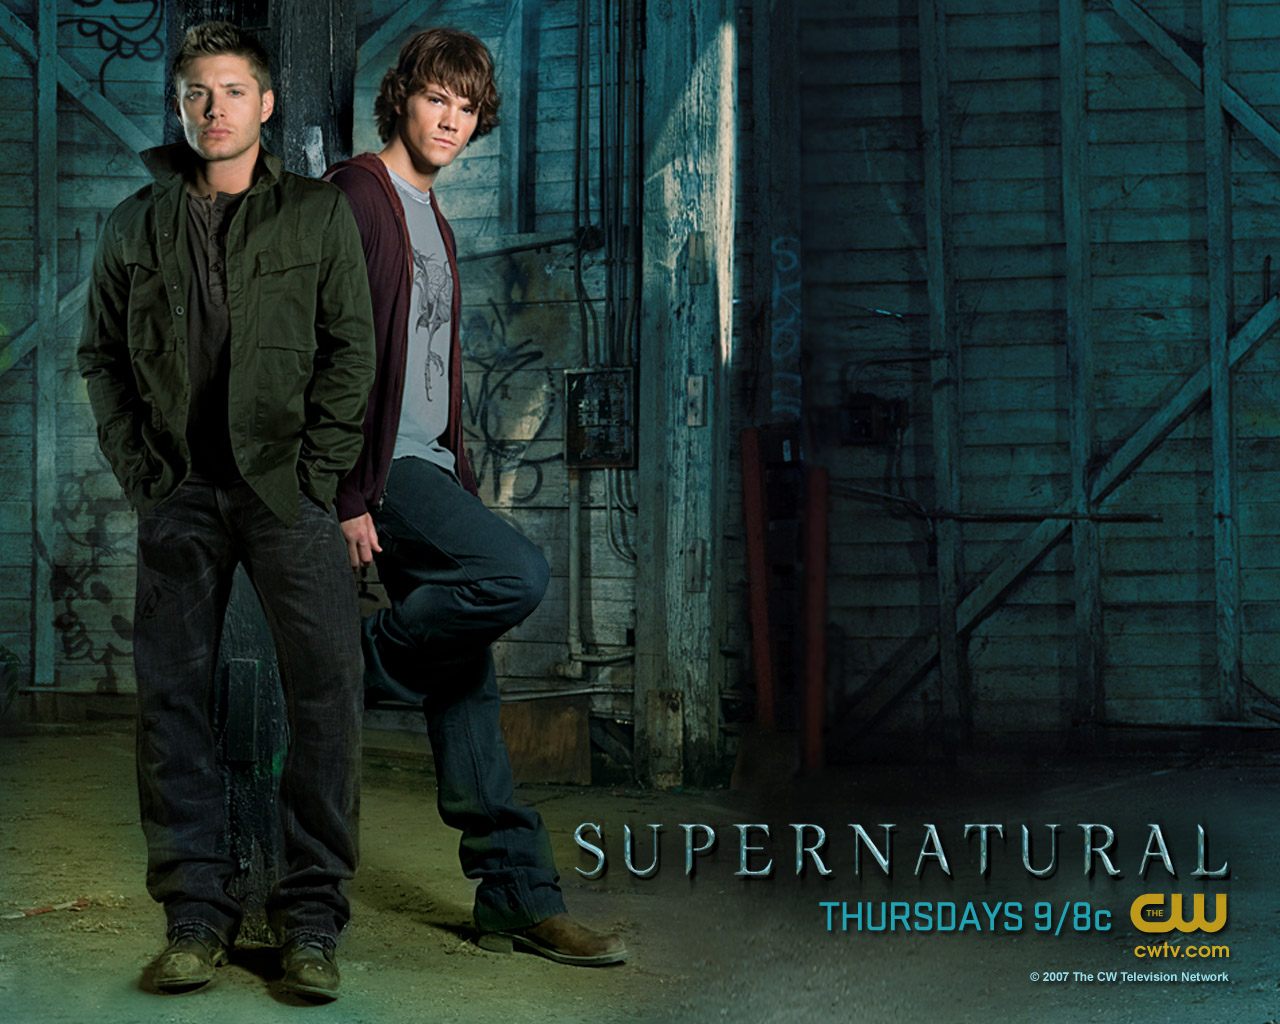 tv show, supernatural